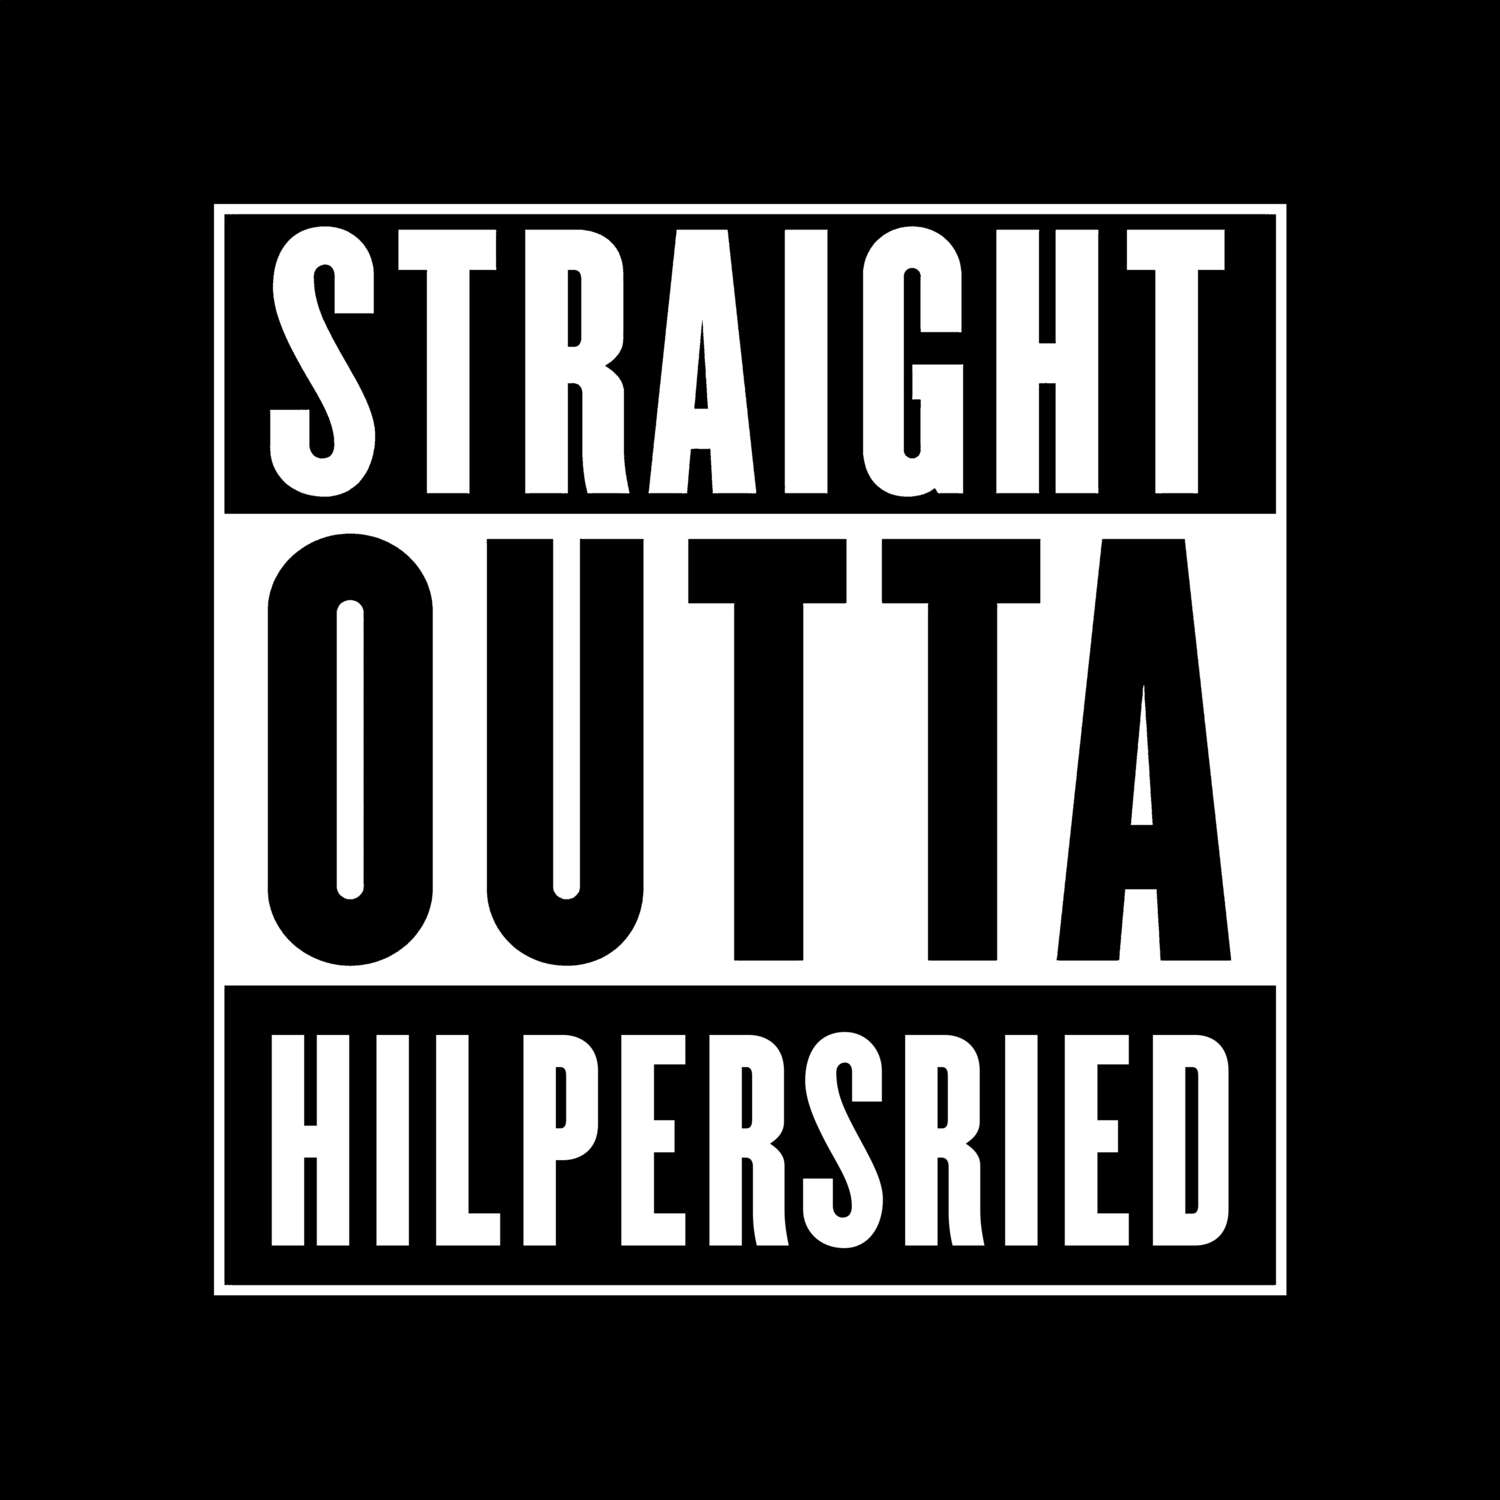 Hilpersried T-Shirt »Straight Outta«